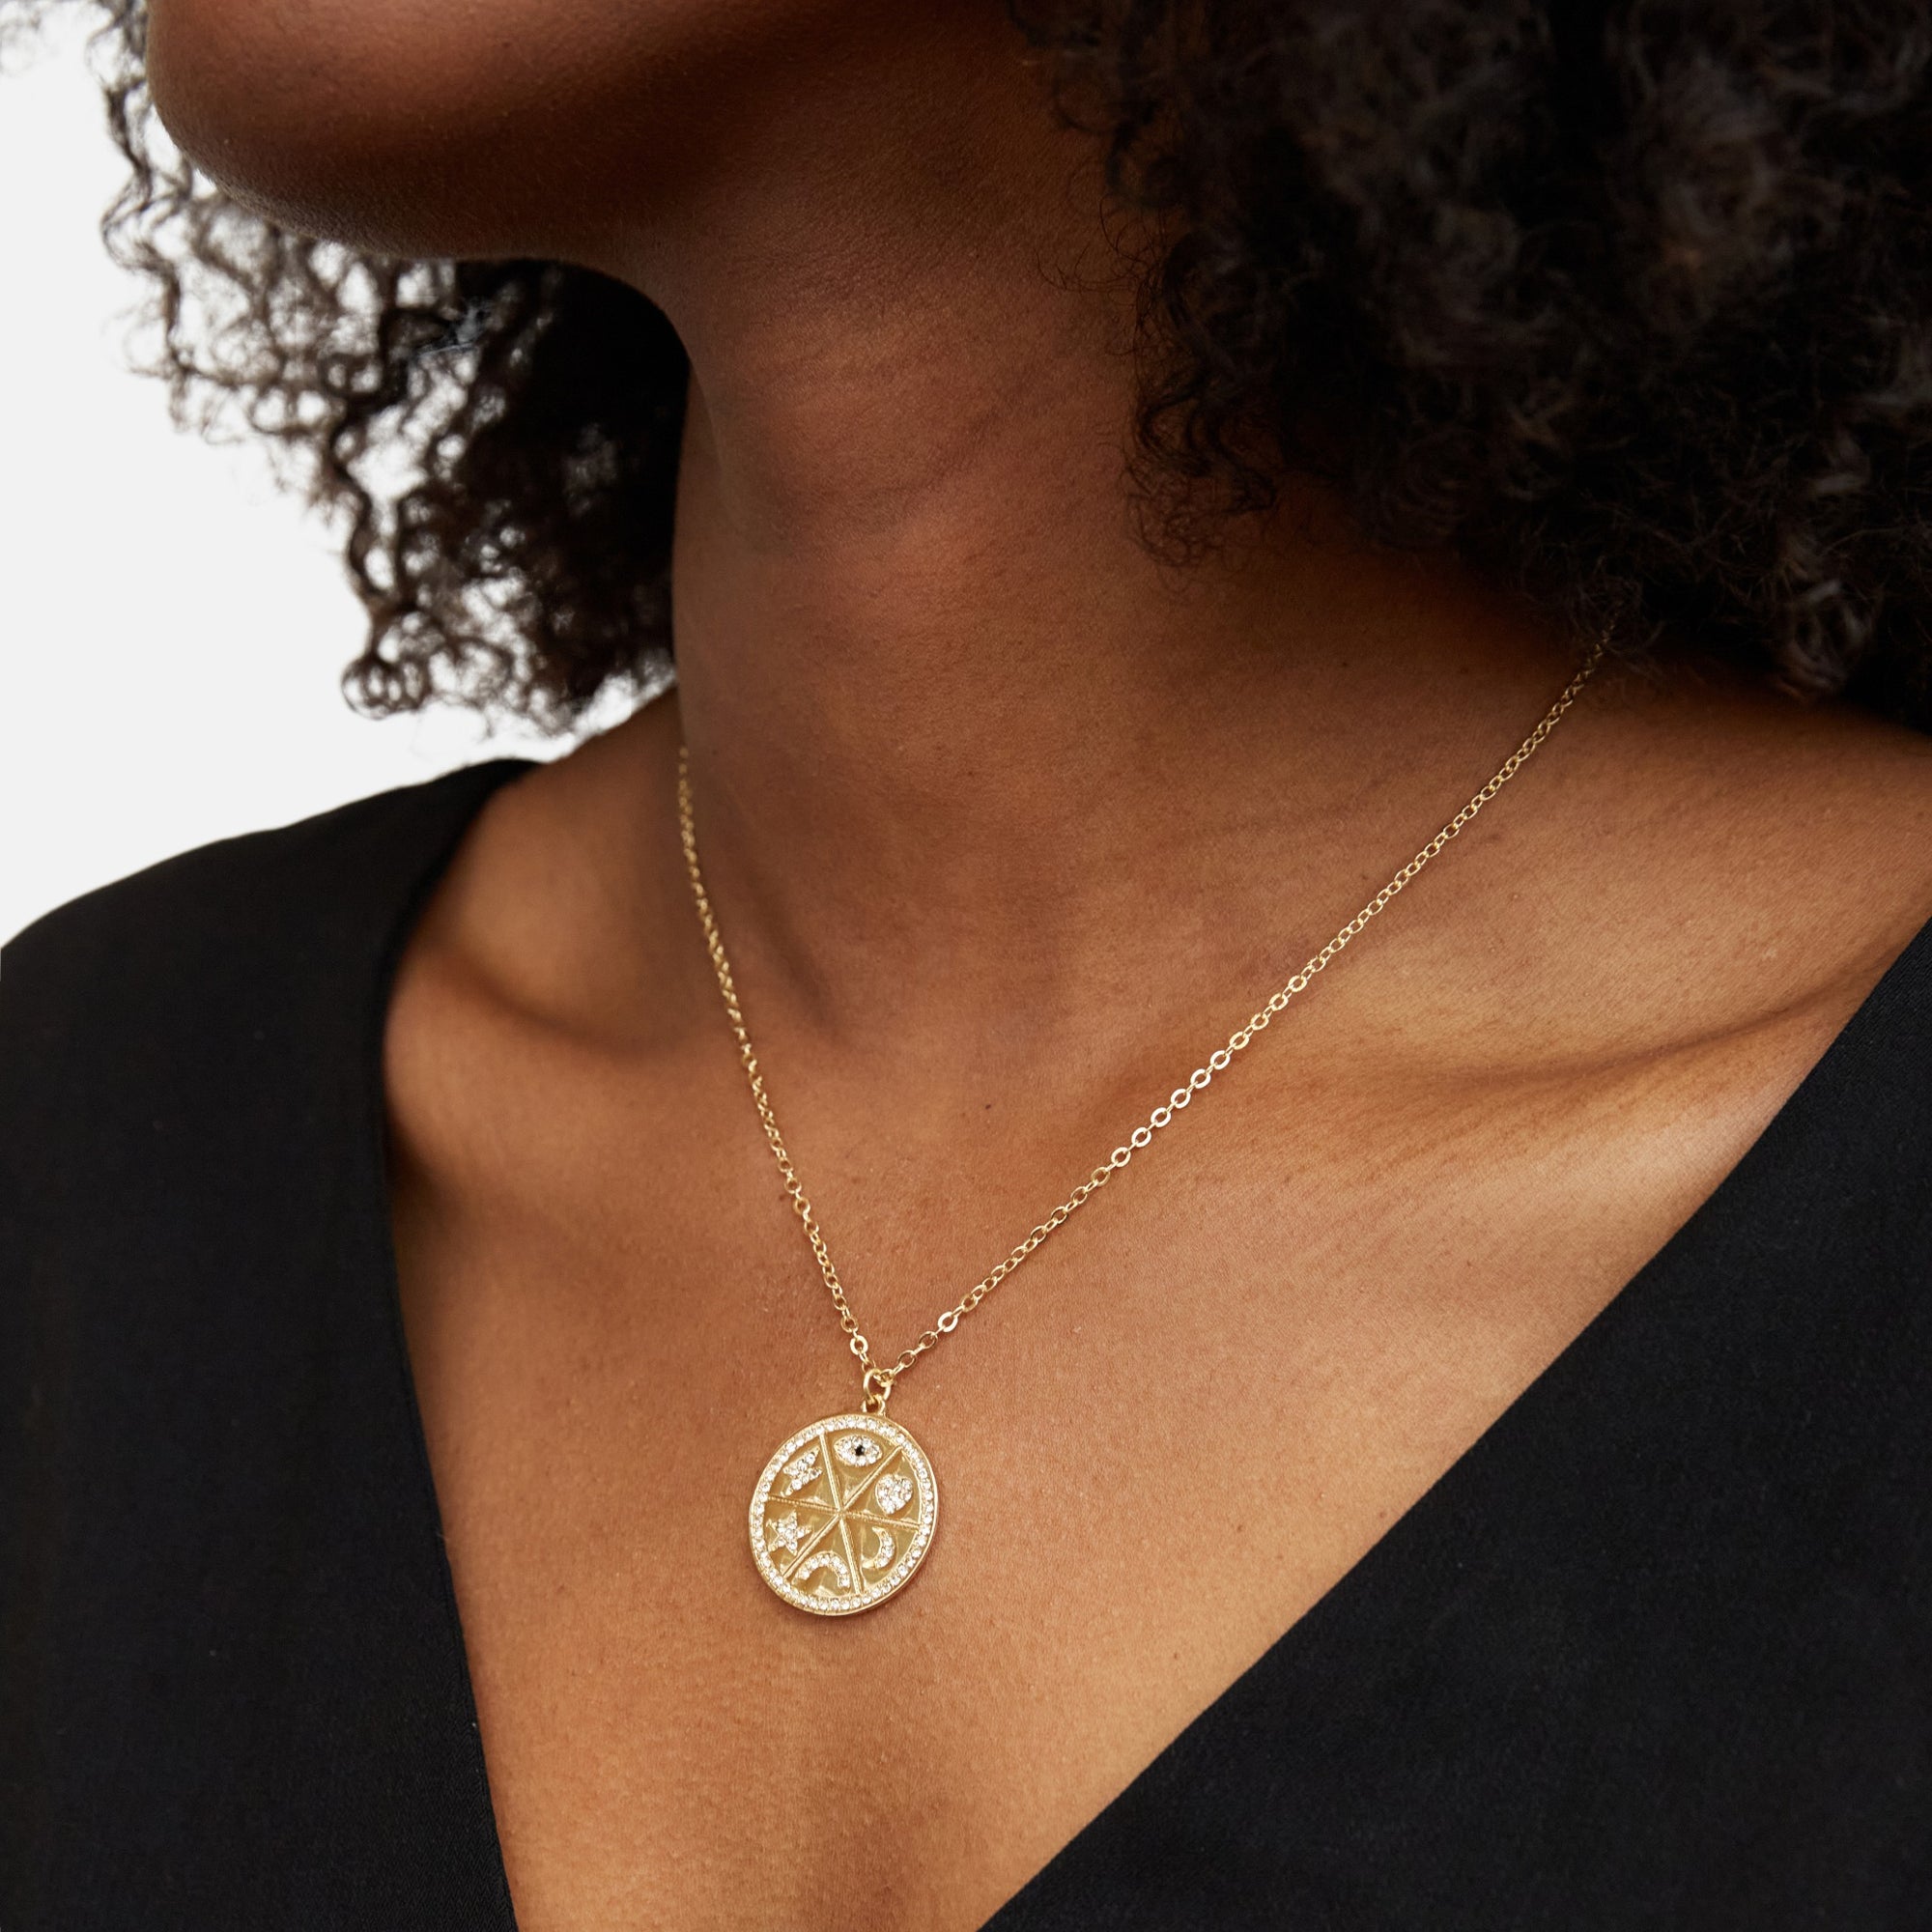 Golden pendant with circular medallion